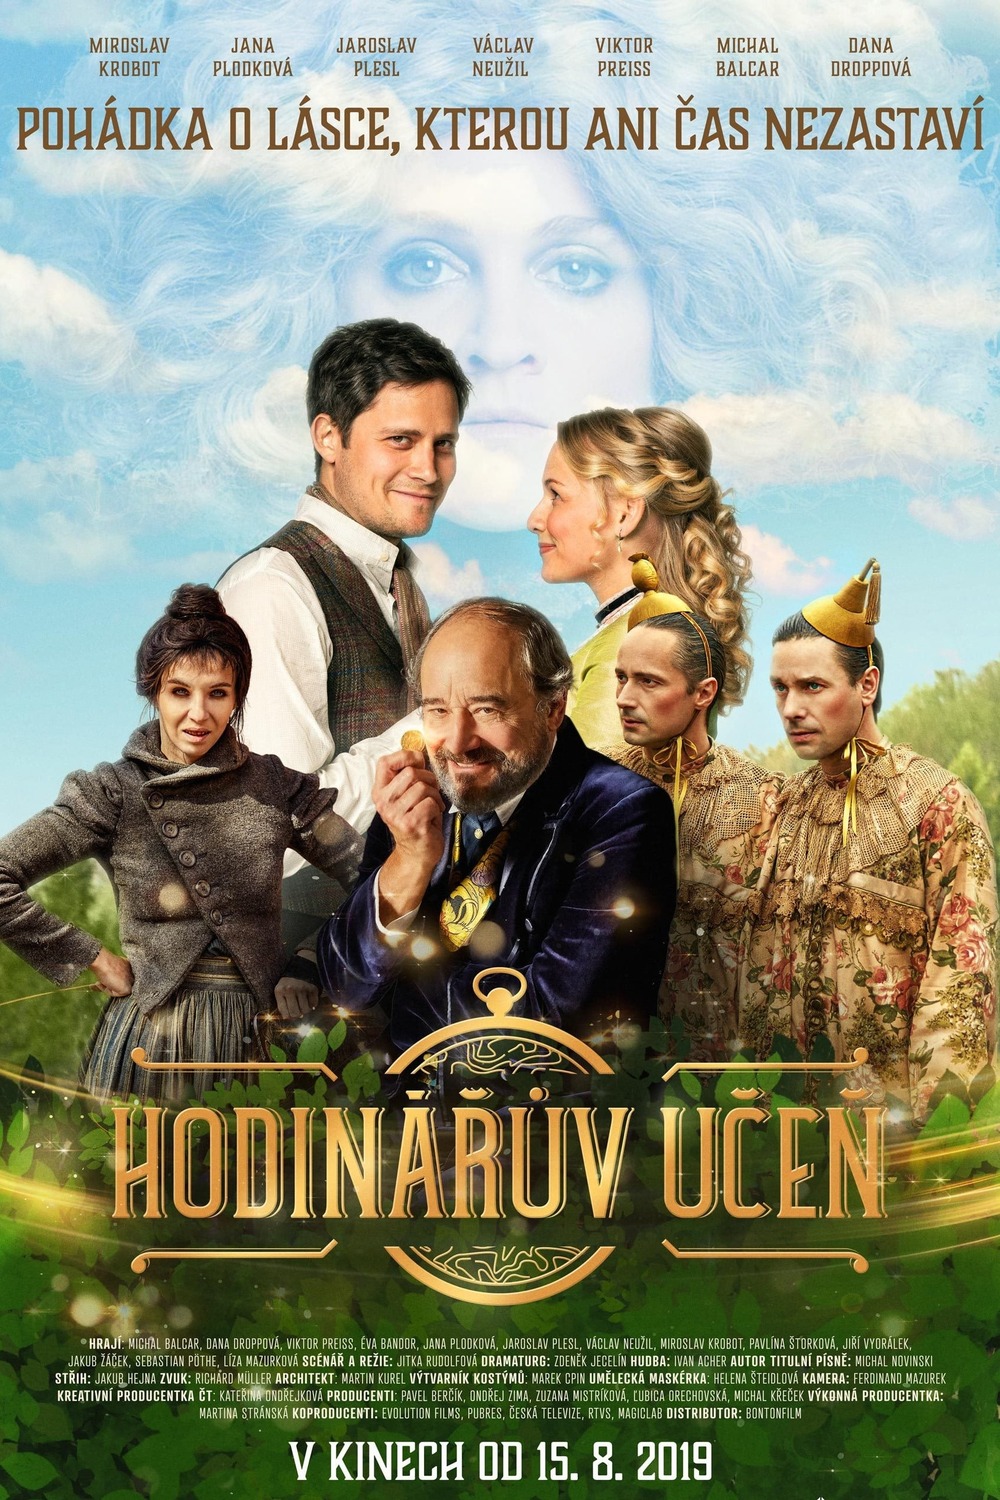 Extra Large Movie Poster Image for Hodináruv ucen 